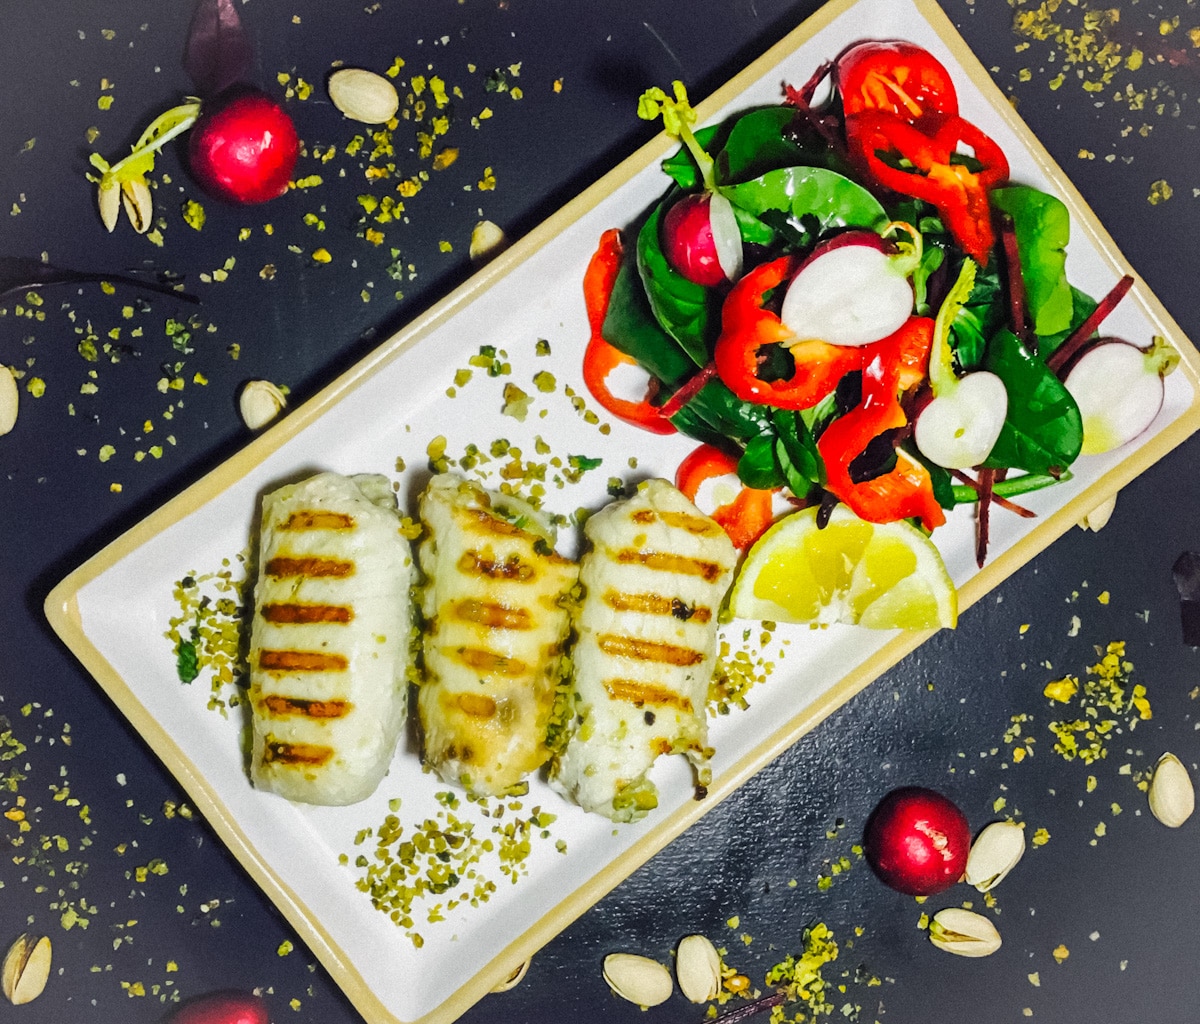 swordfish involtini with a salad and lemon wedge